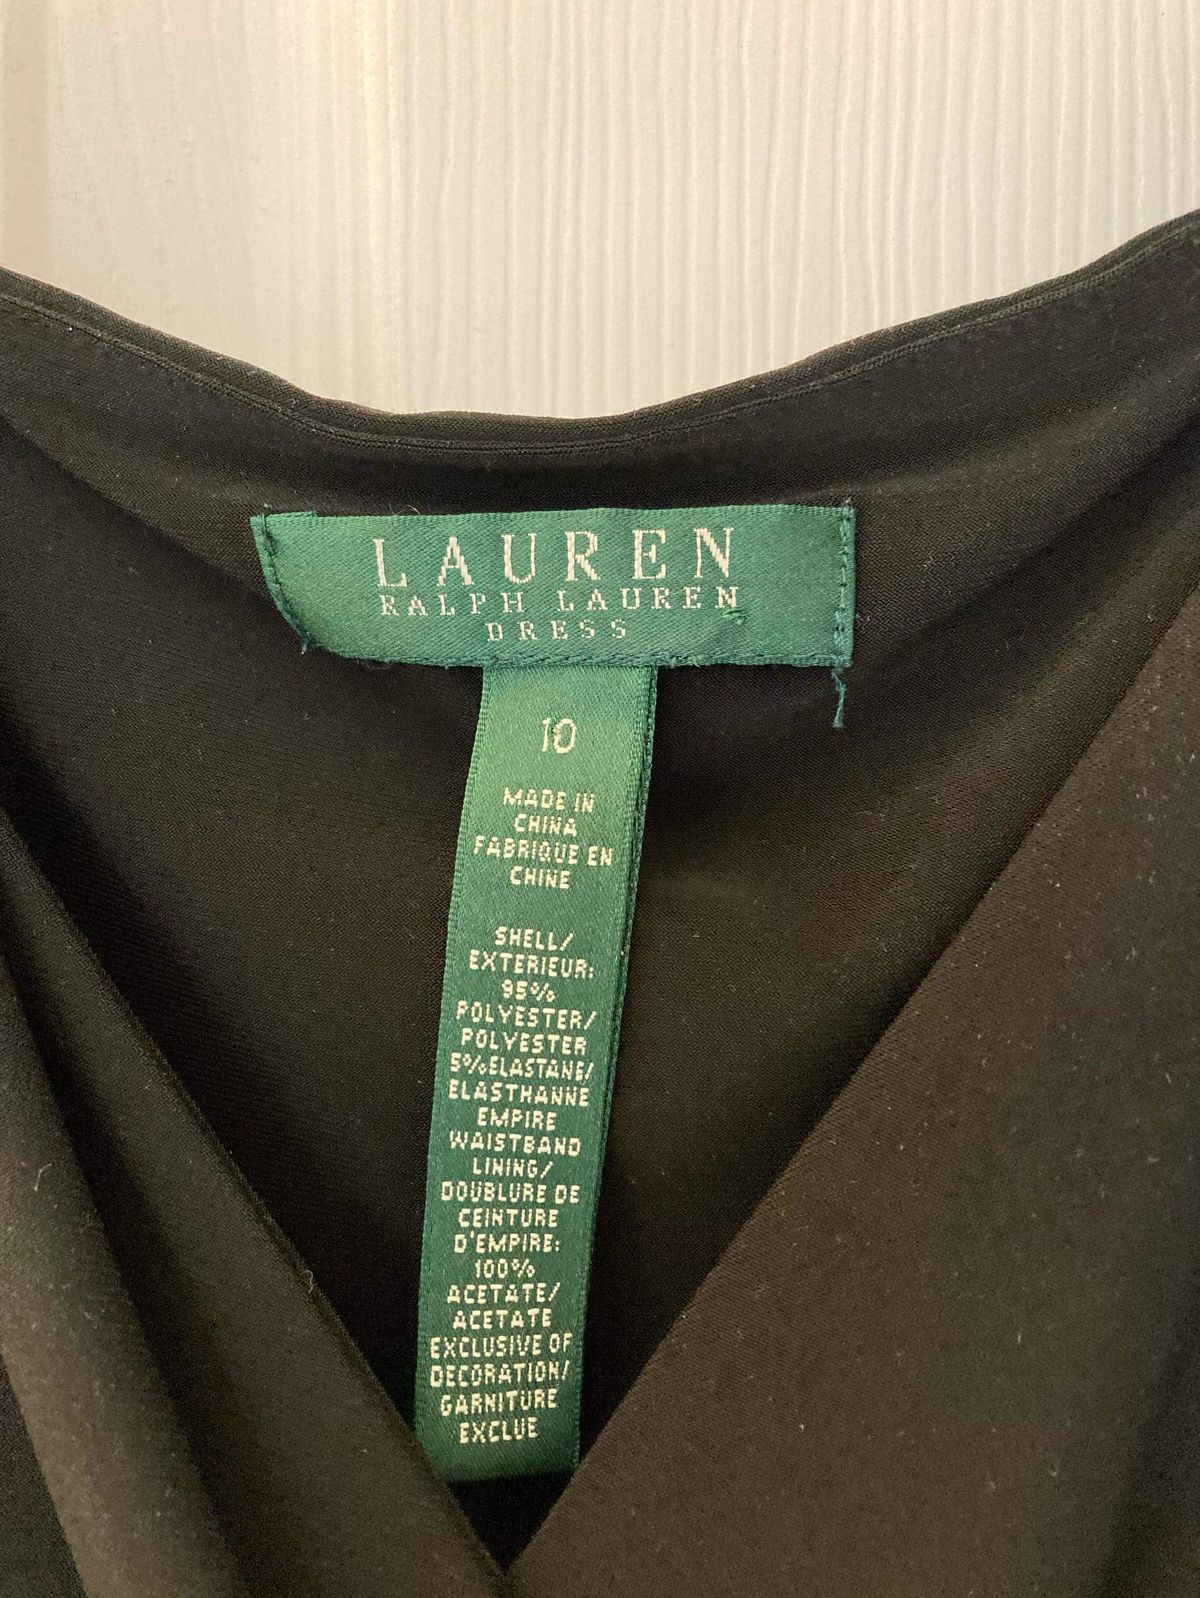 Ralph Lauren Size 10 Black Cocktail Dress on Queenly